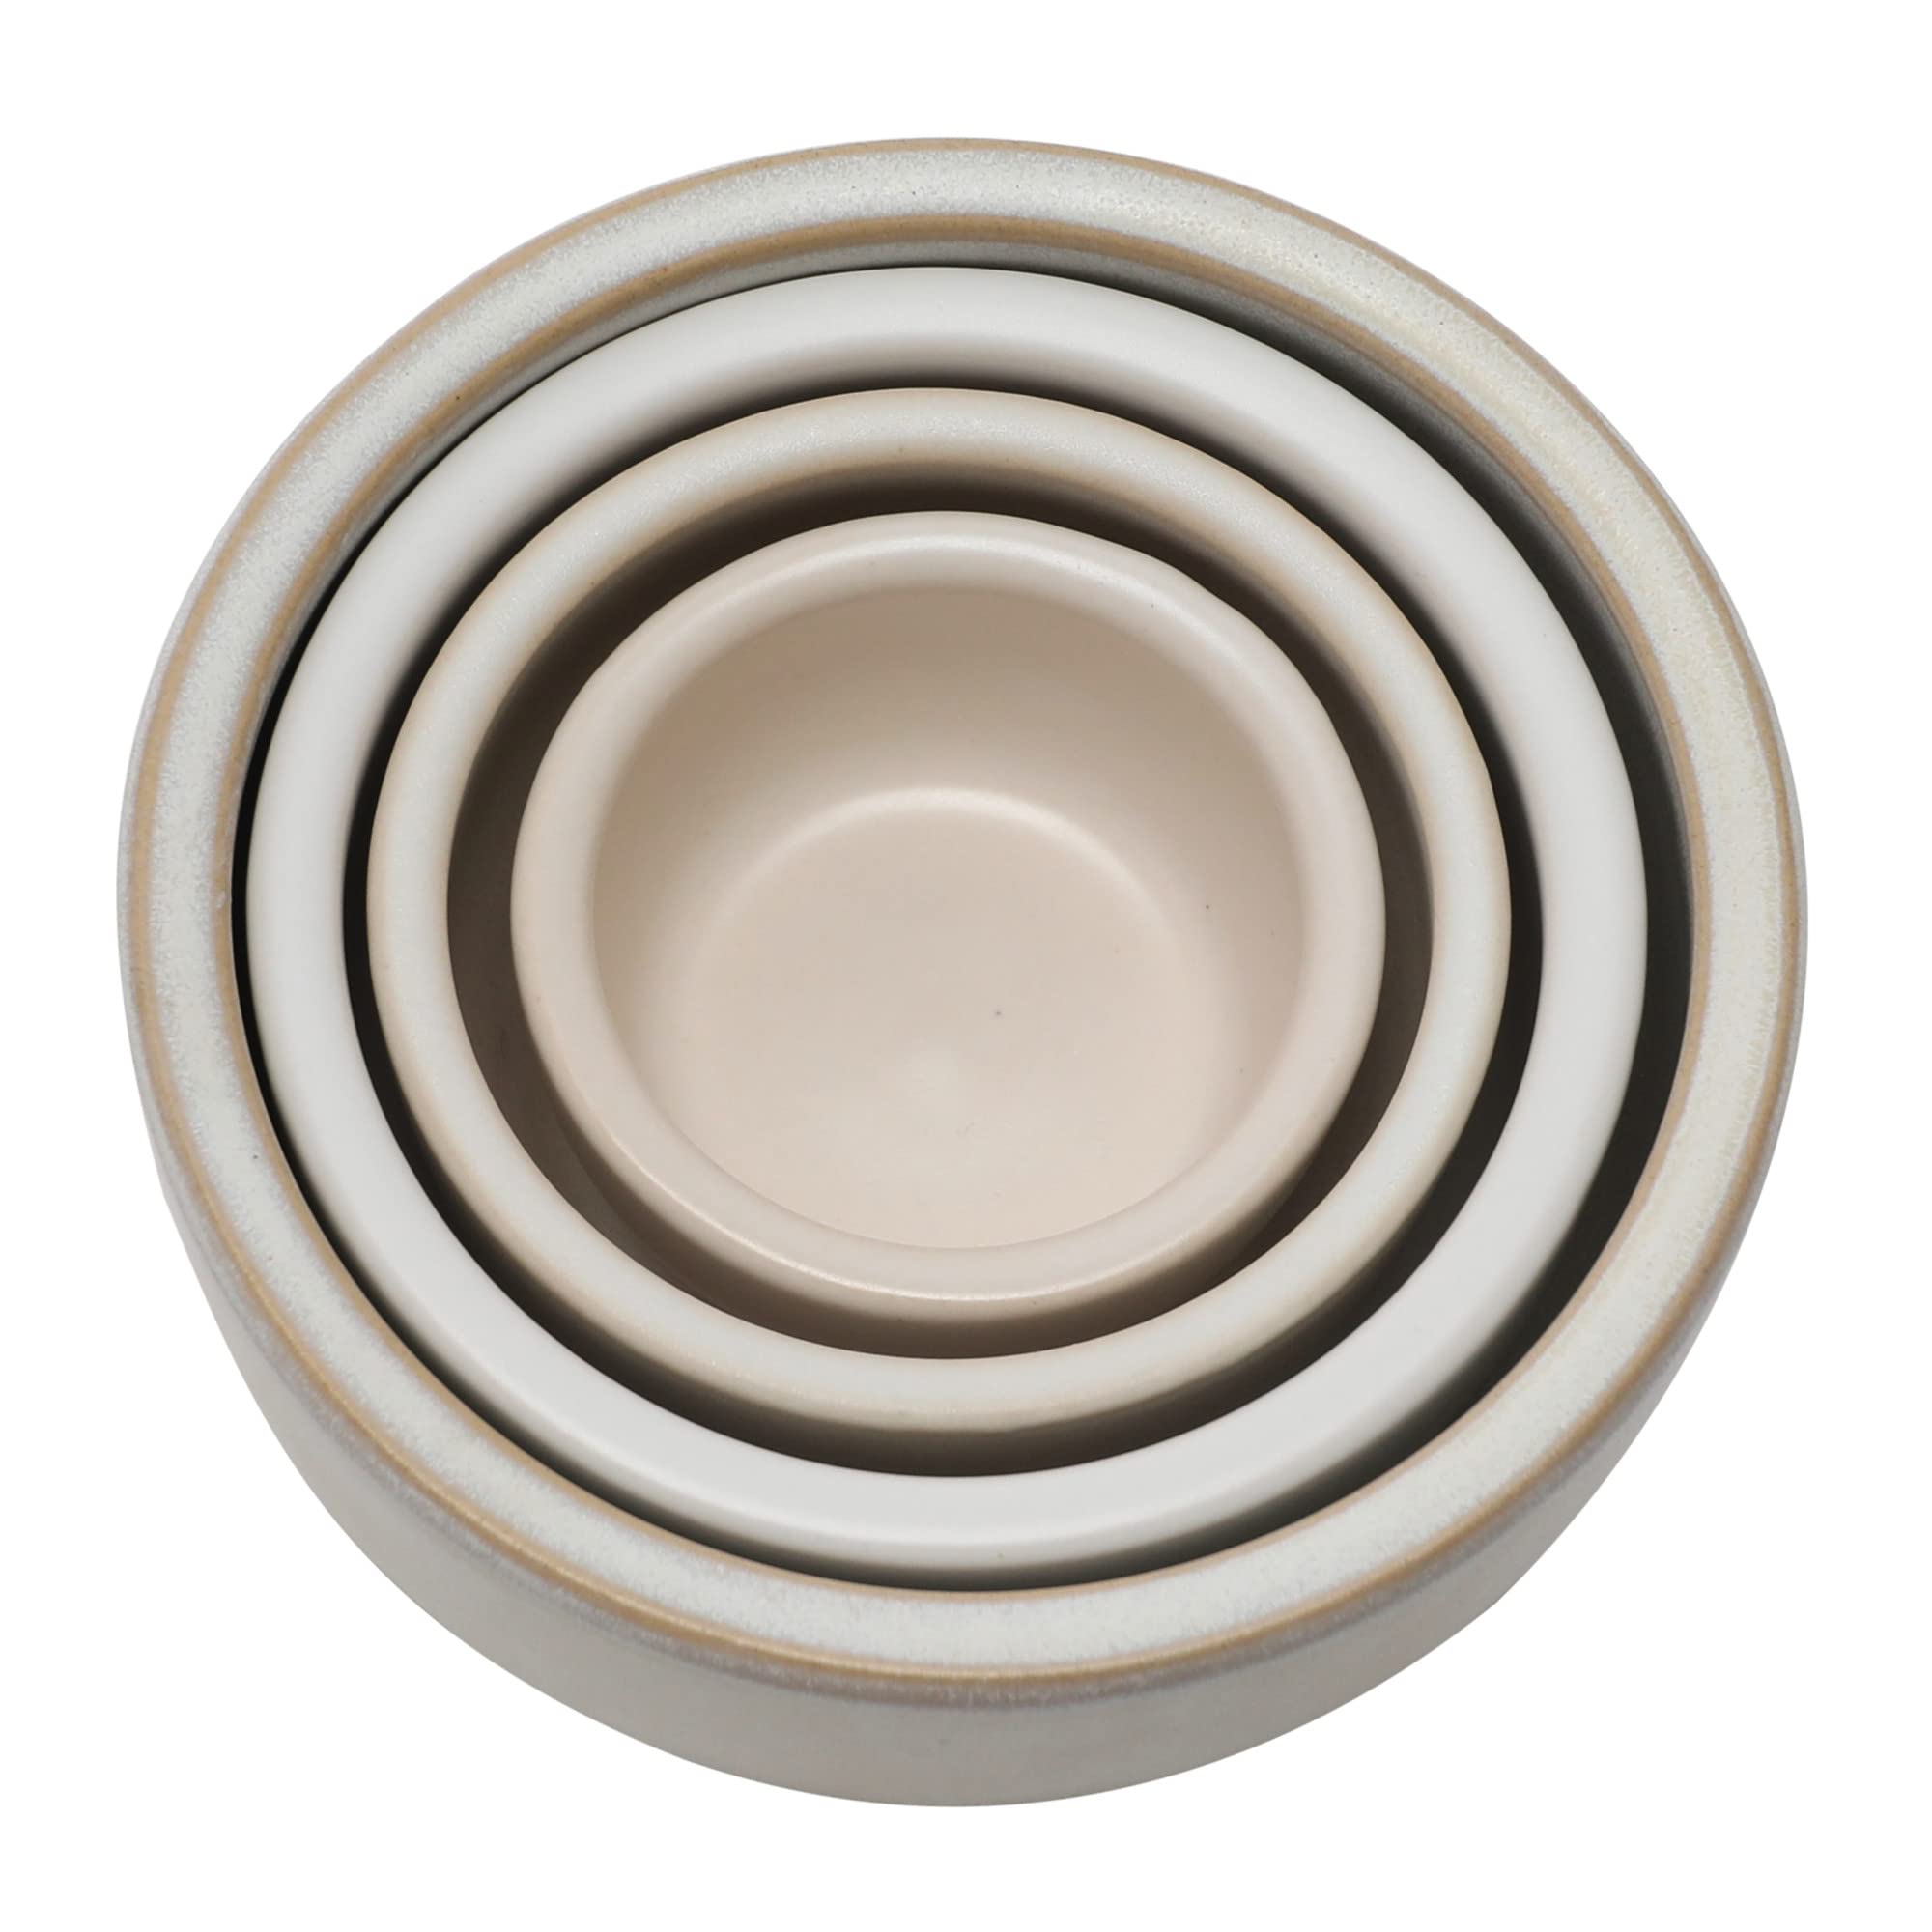 Bloomingville Bloomingville Stoneware Nesting Bowls, White Reactive Glaze, Set of 4